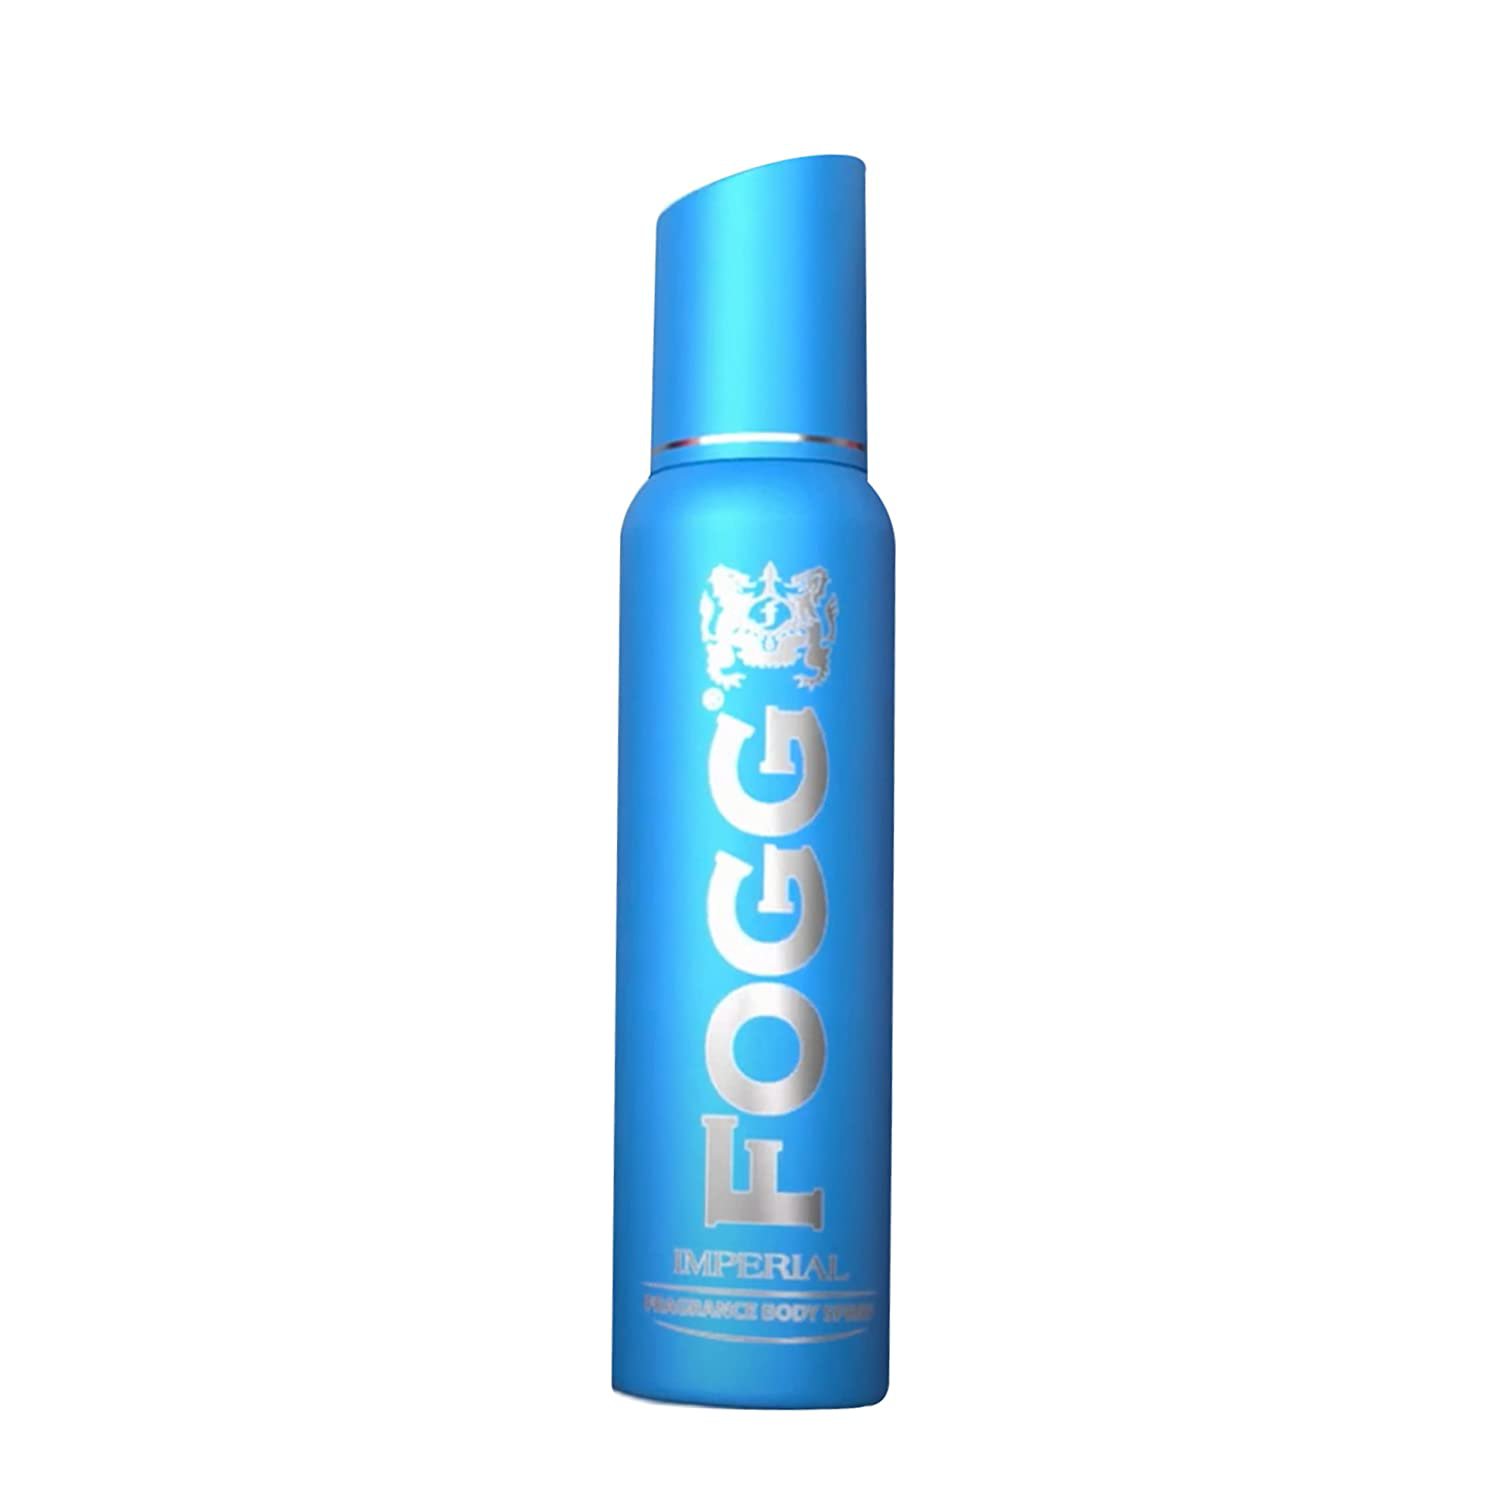 Fogg Imperial Perfume Body Spray, Long Lasting No Gas Deodorant for Men, 150ml